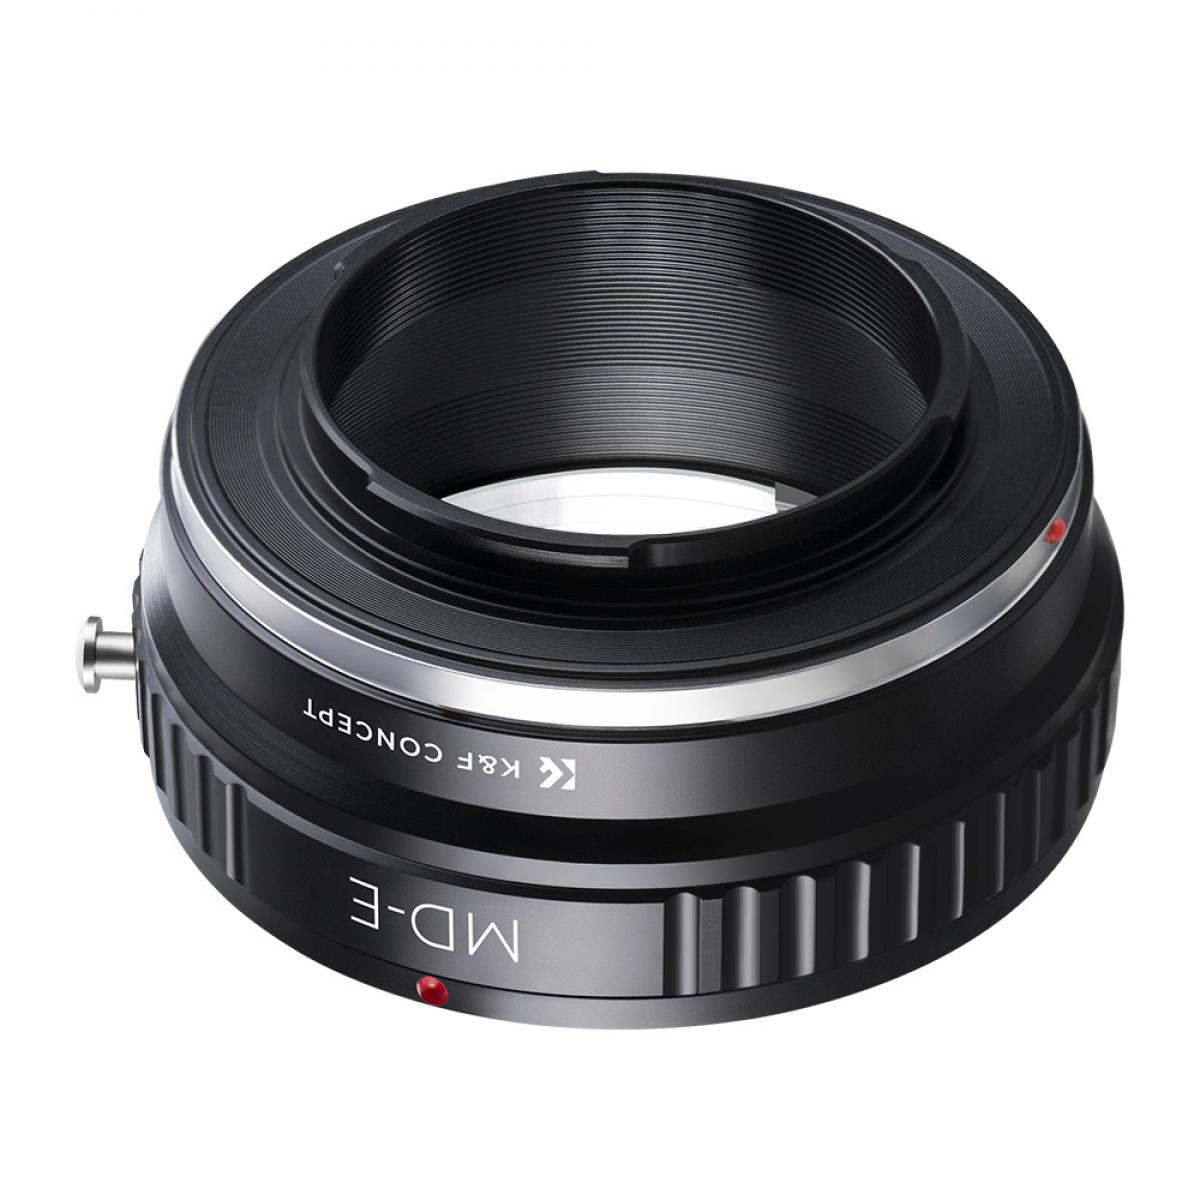 Minolta MD MC Lenses to Sony E Lens Mount Adapter K&F Concept M15101 Lens Adapter